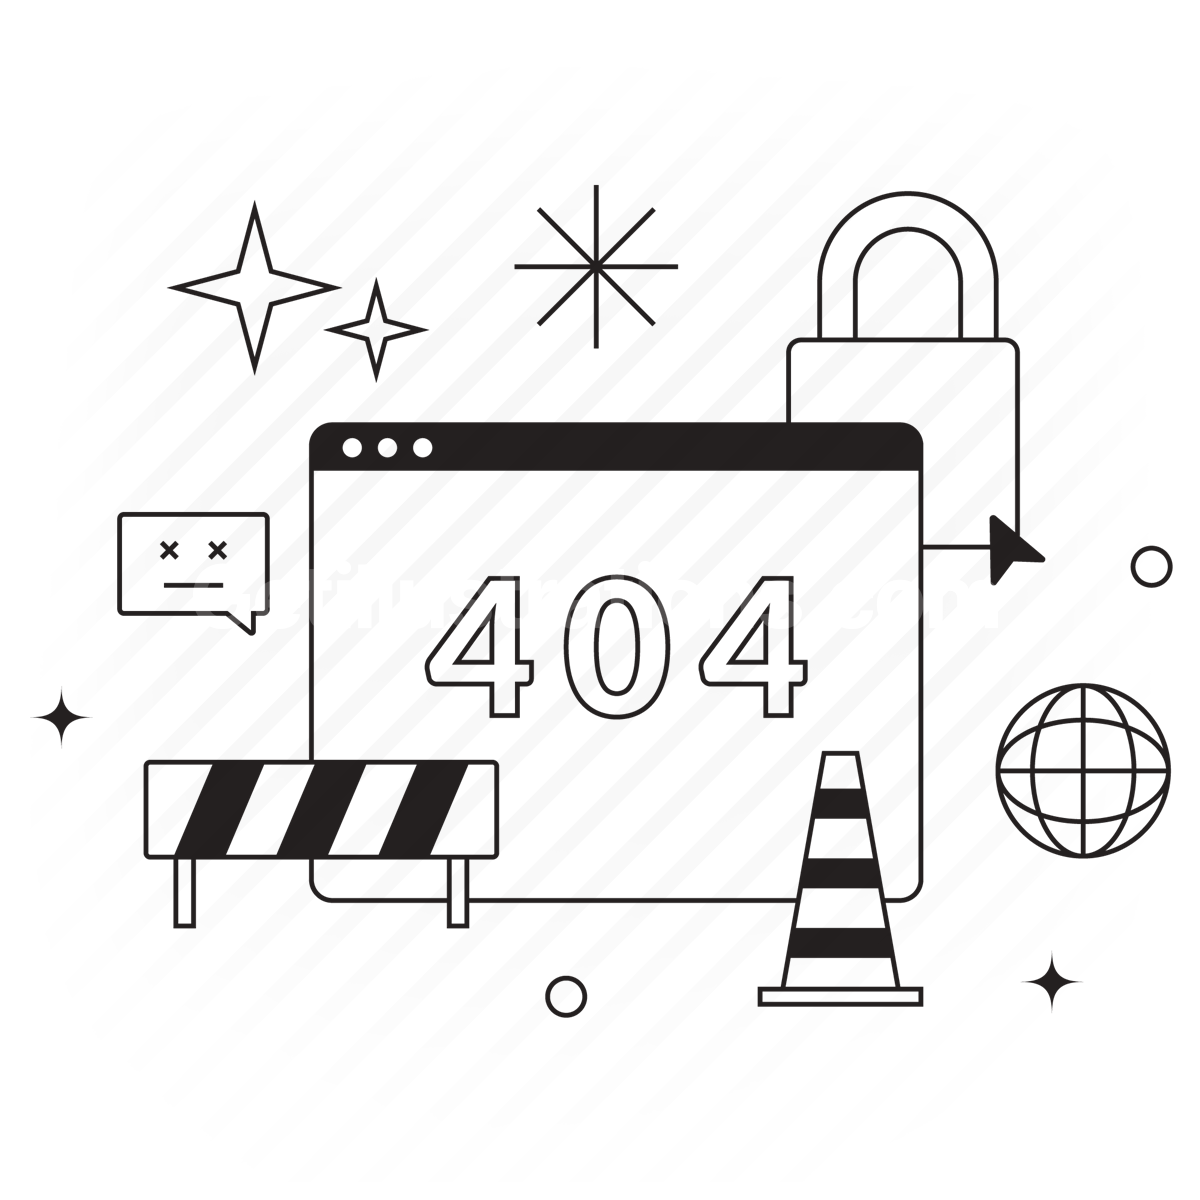 Error and 404 illustration